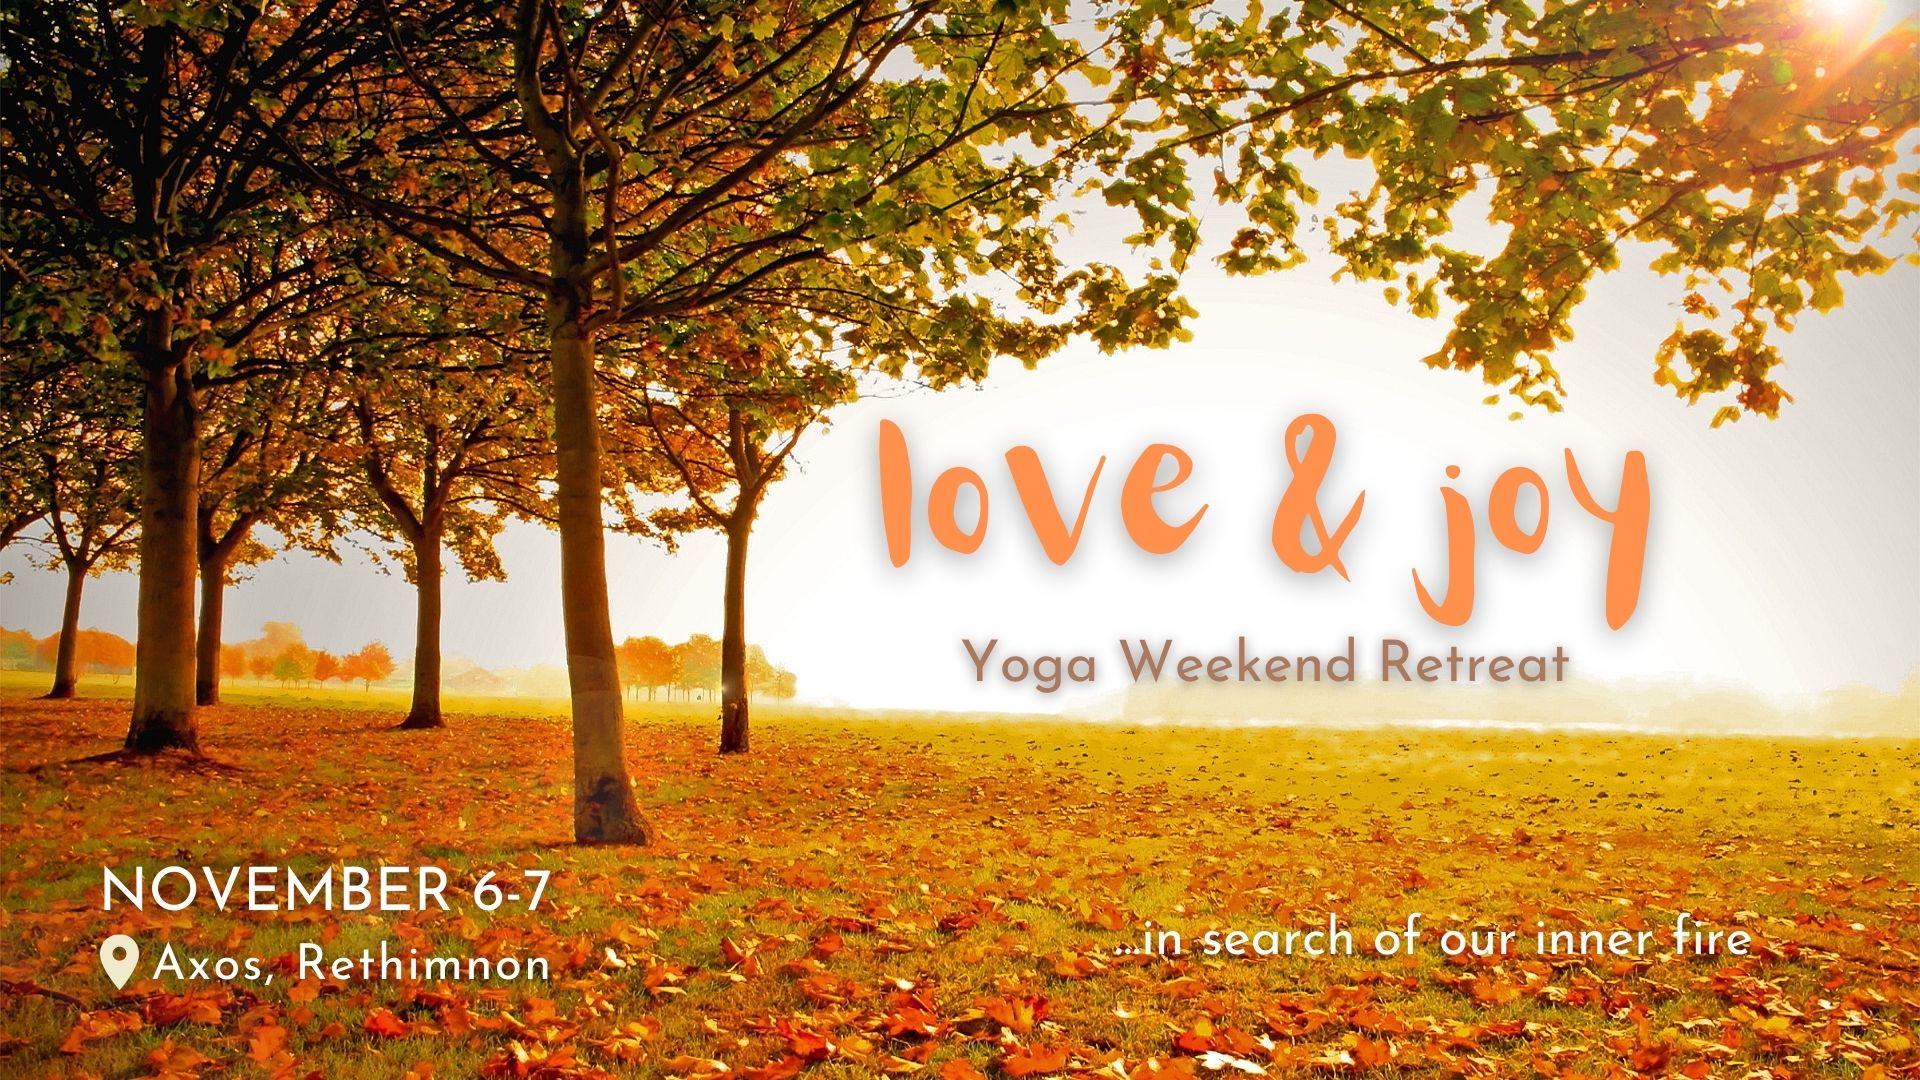 Weekend Yoga and Ecstatic Movement Retreat